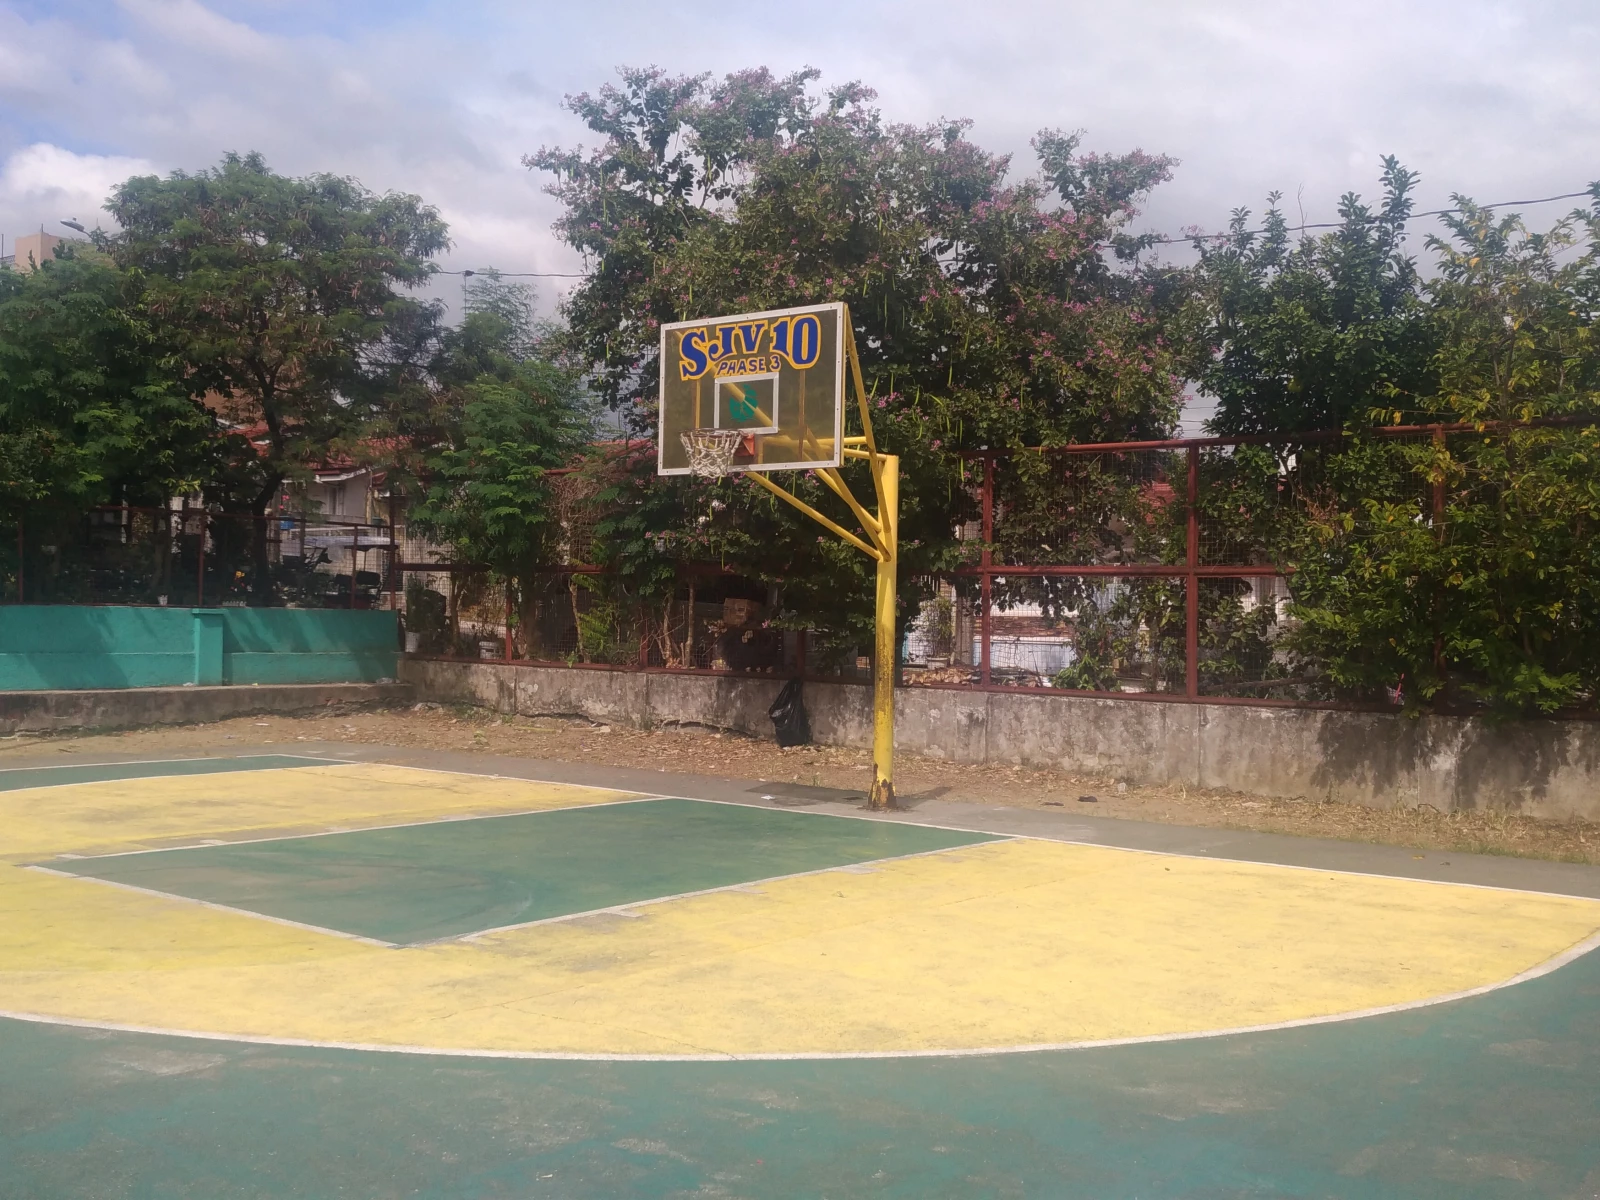 San Pedro Basketball Court: SJV10 PH3 Basketball Court Courts of the